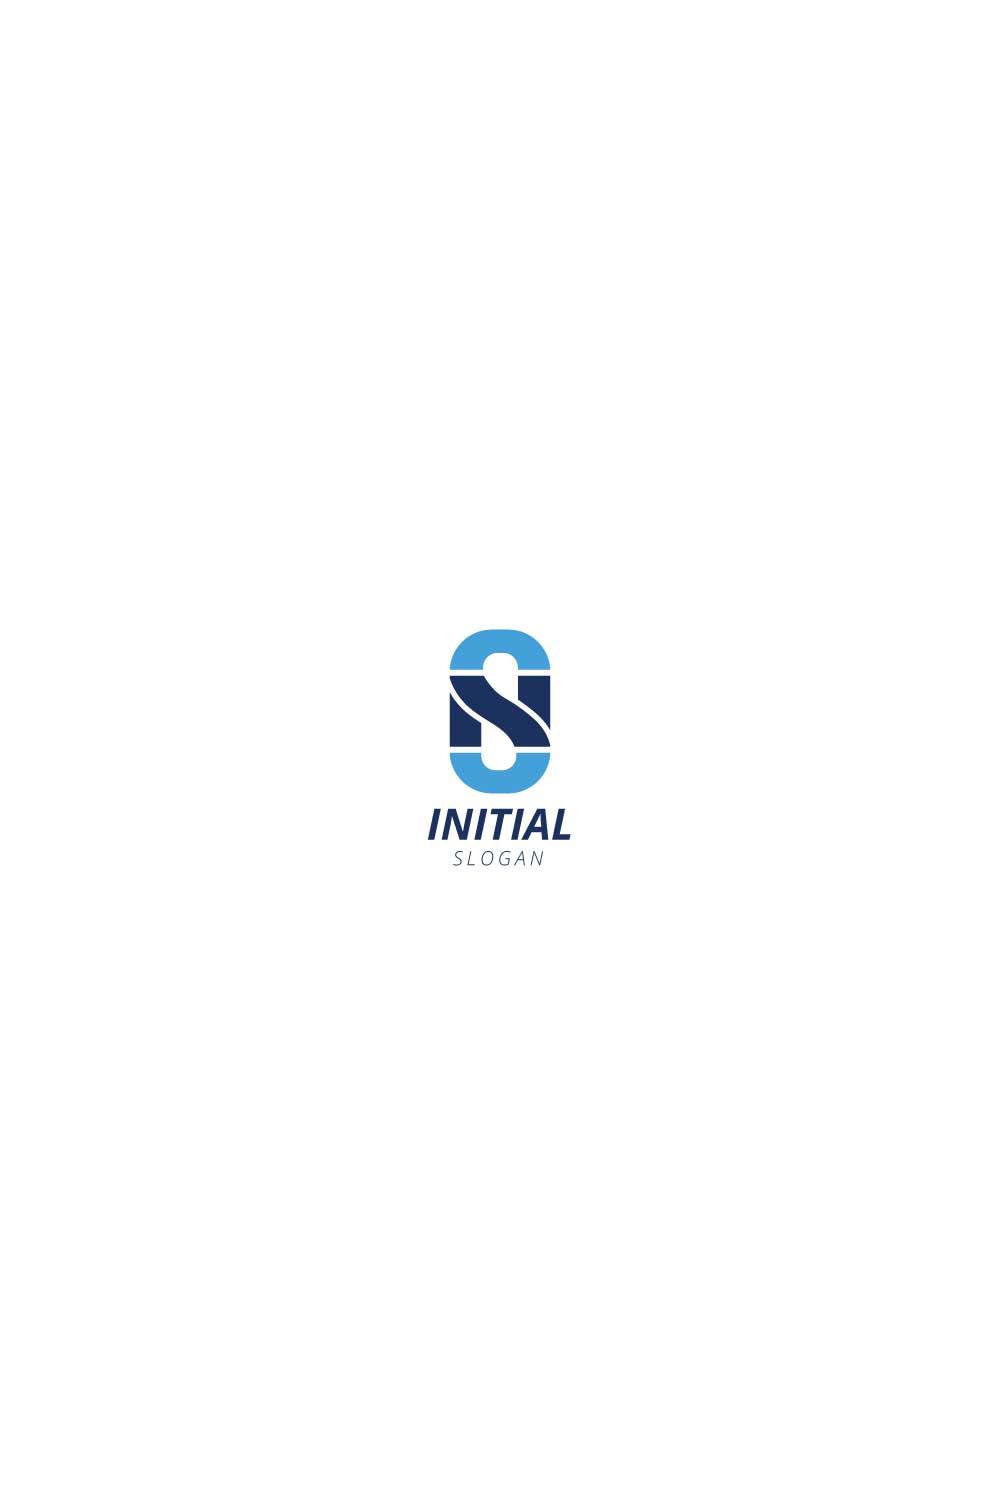 Letter NS or SN Logo design pinterest preview image.